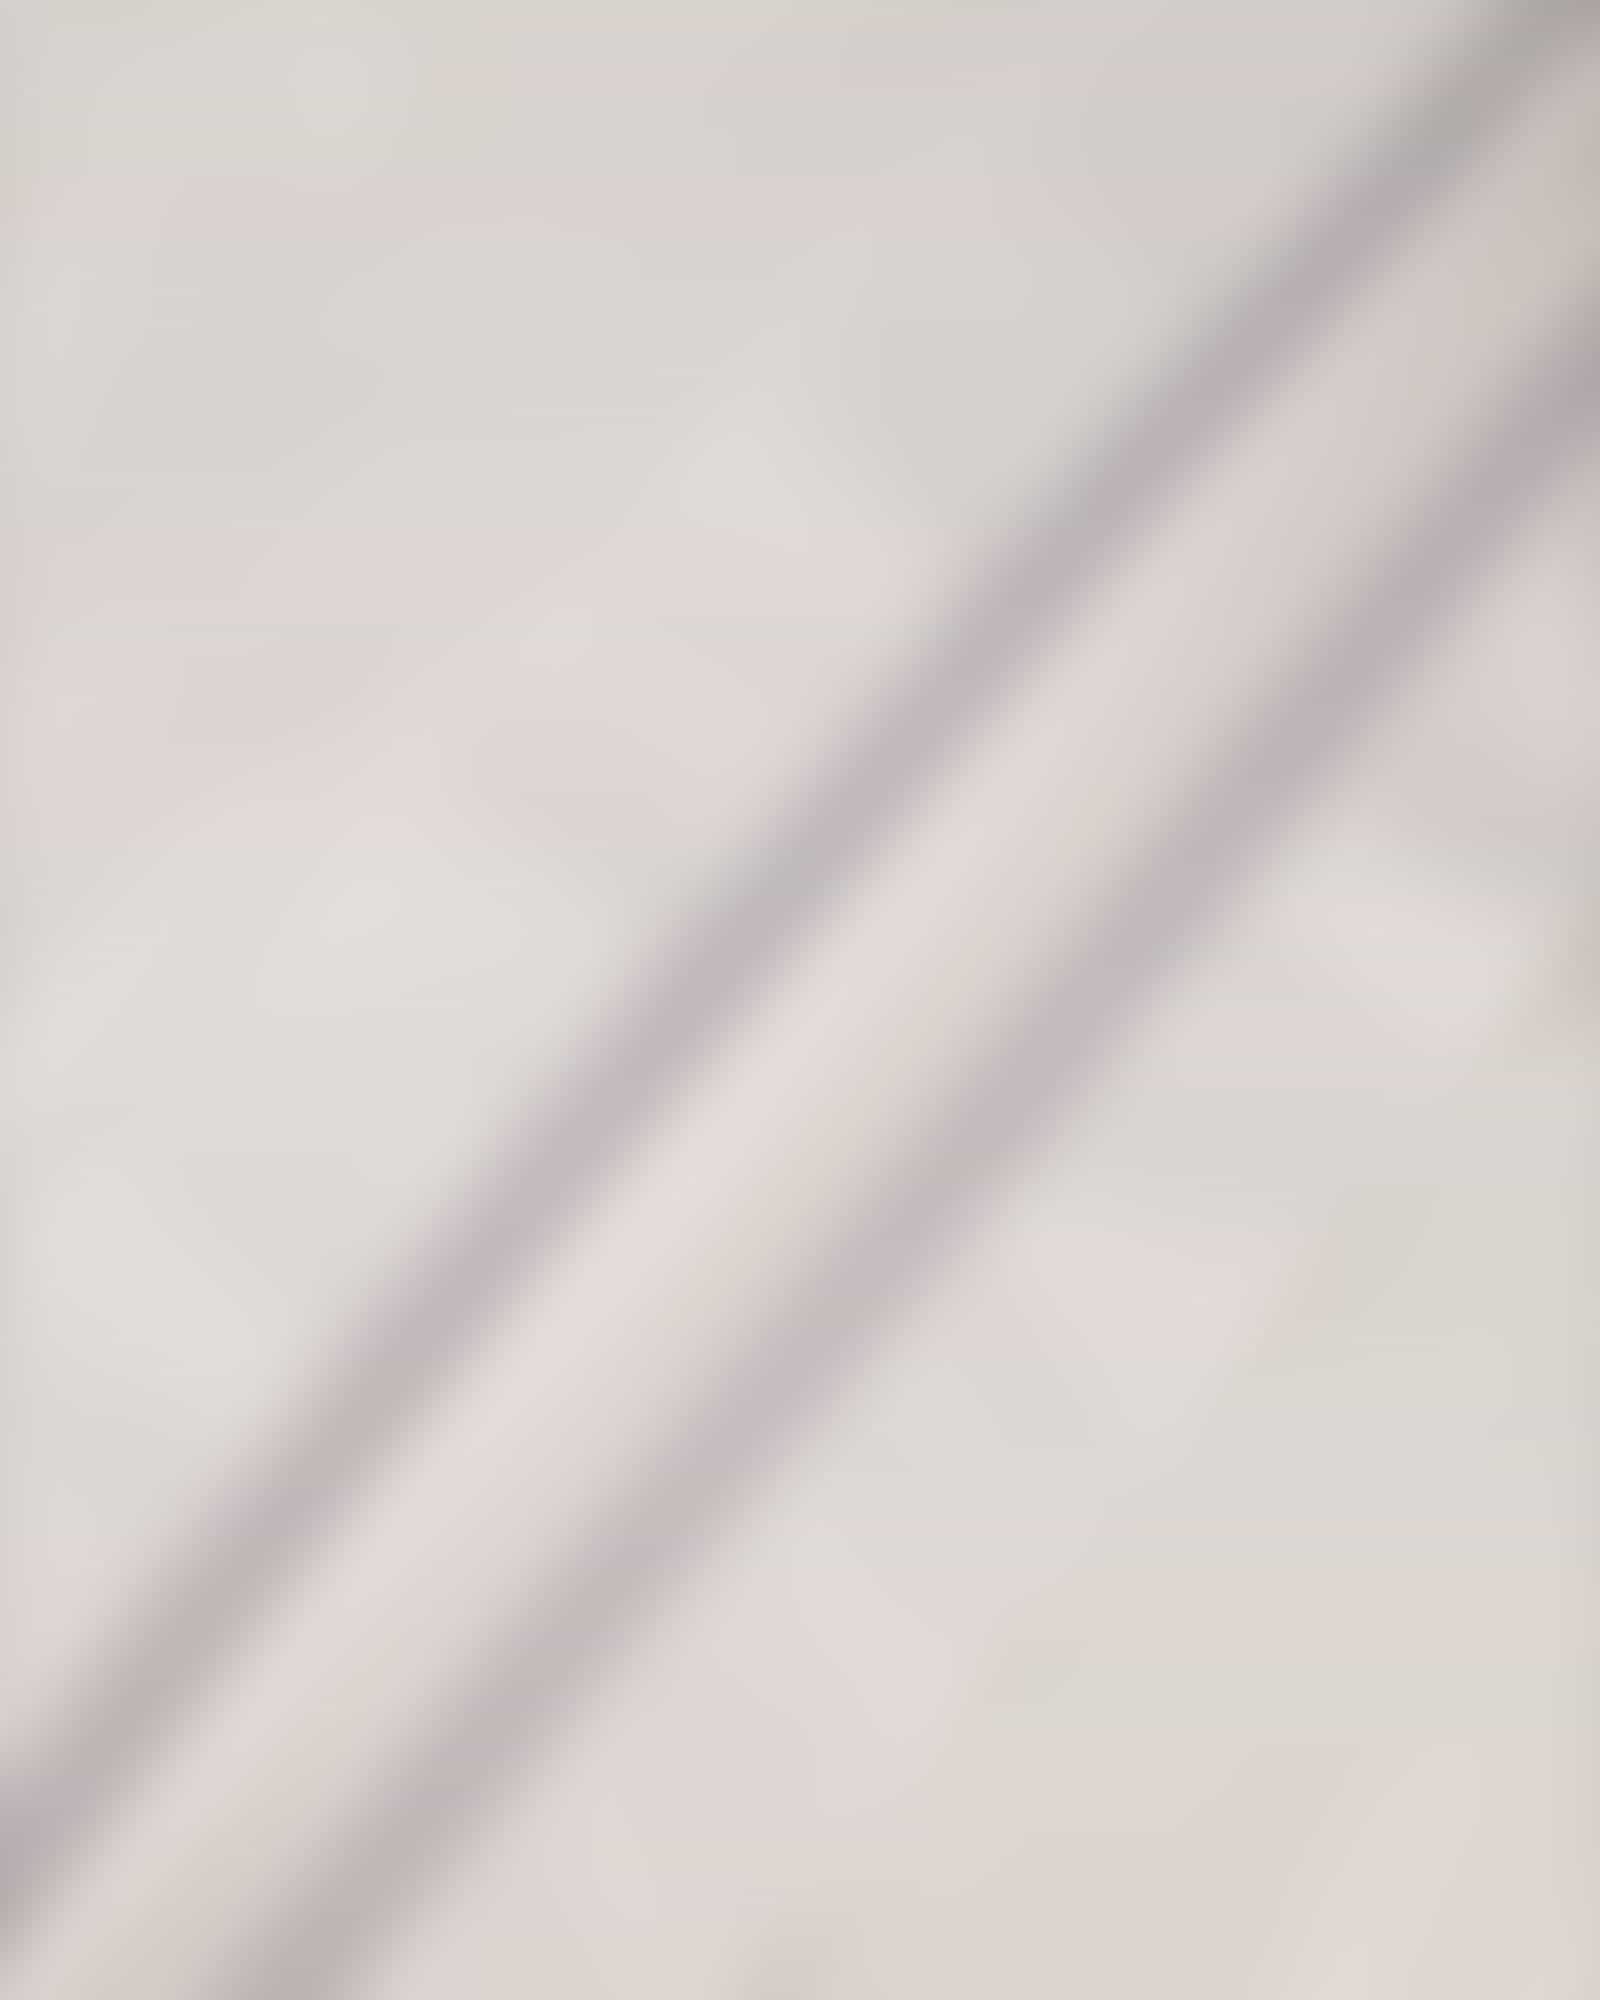 JOOP Herren Bademantel Kimono Pique 1656 - Farbe: Weiß - 600 Detailbild 1